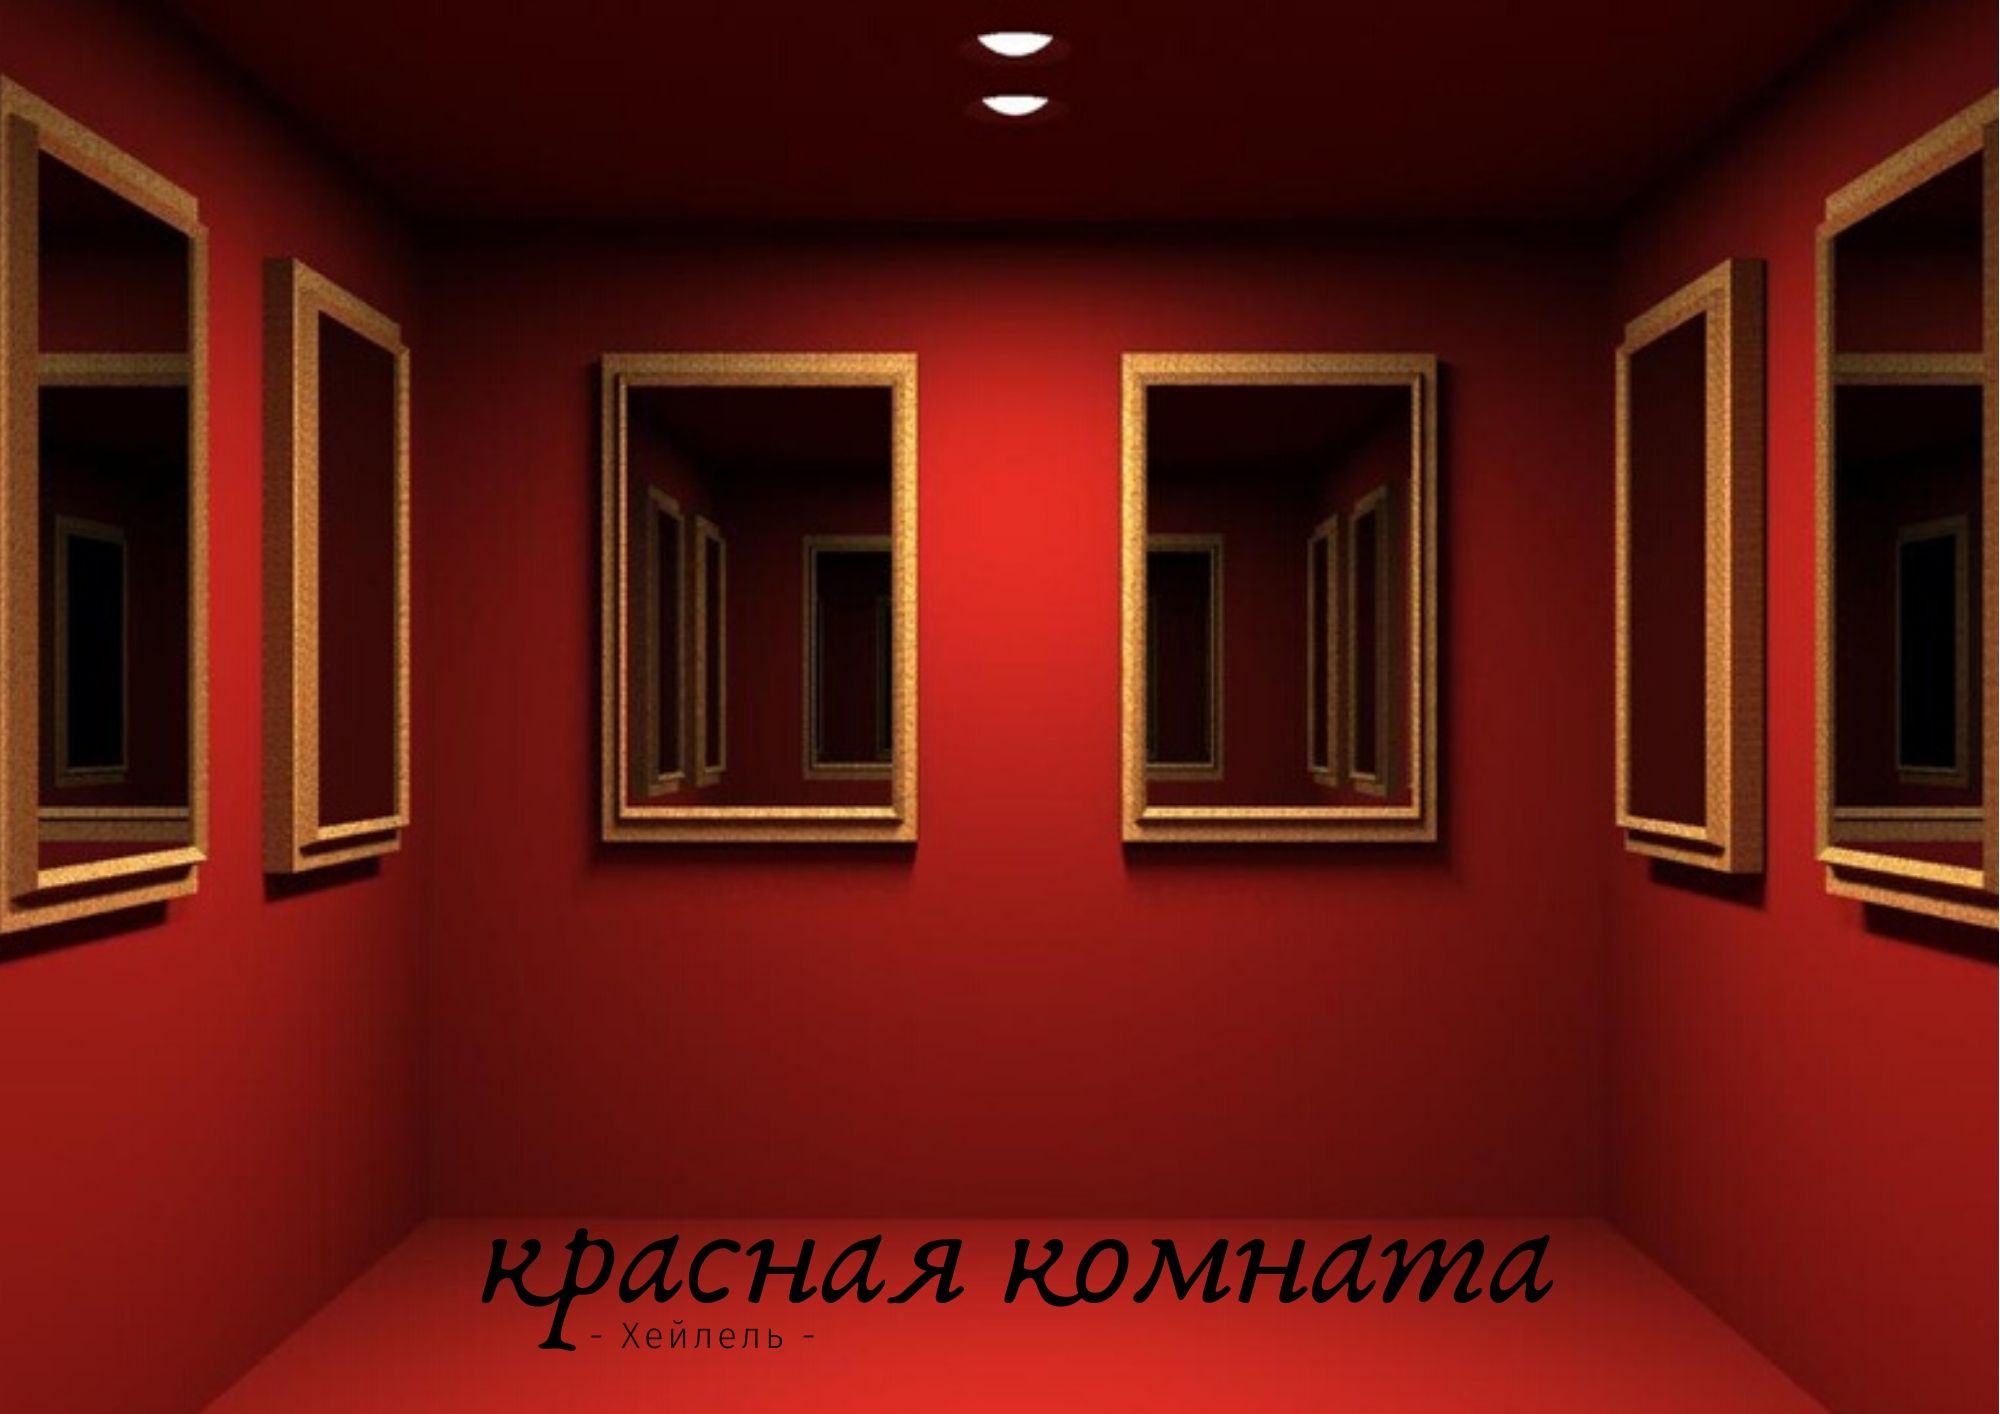 Игры красная стена. Red Room" красная комната  (1999) ужасы ". Комната для фотошопа. Задний фон для фотошопа комната. Пустой интерьер.